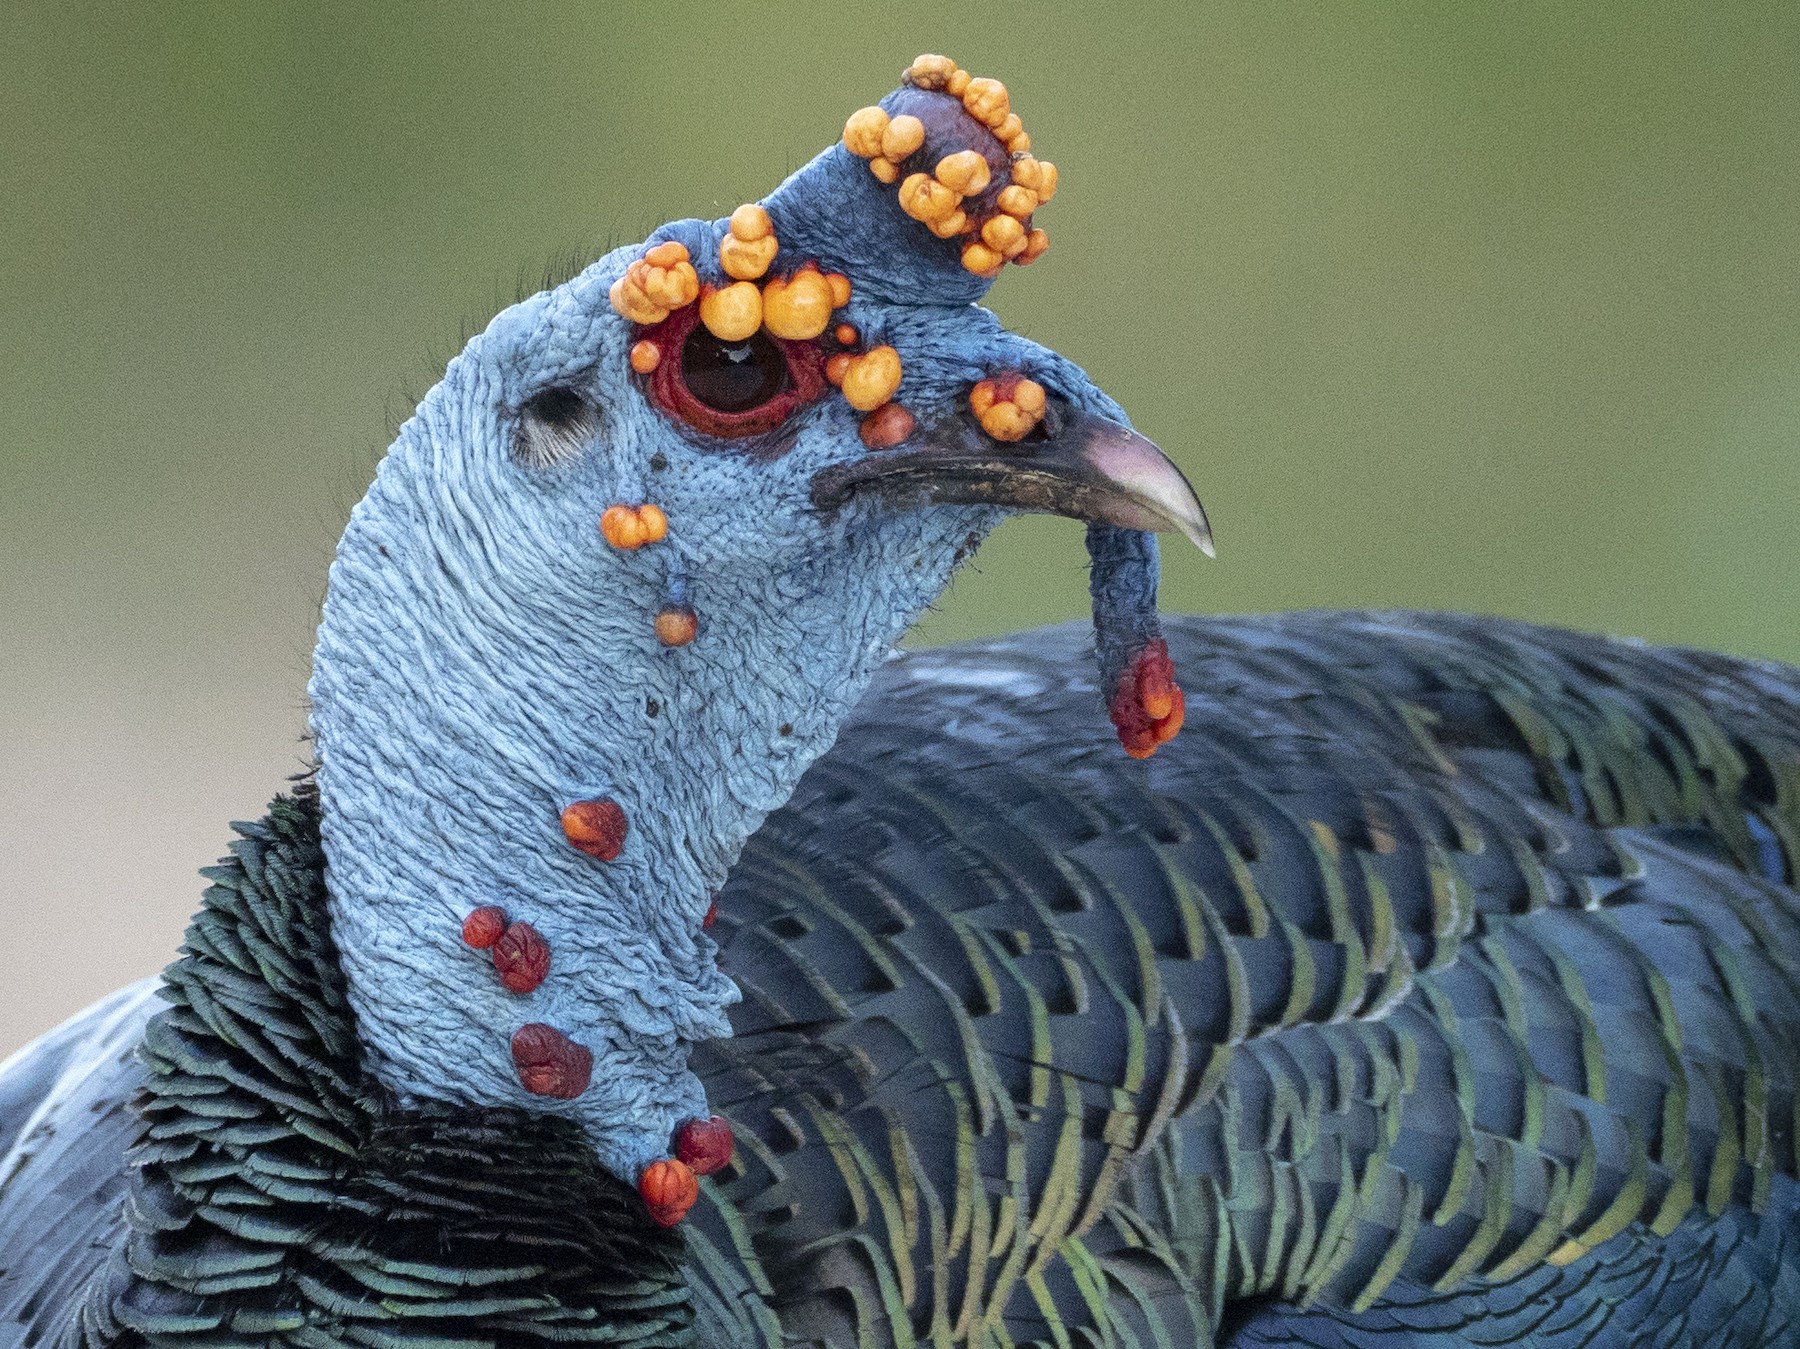 Ocellated Turkey - Andres Vasquez Noboa - Tropical Birding Tours